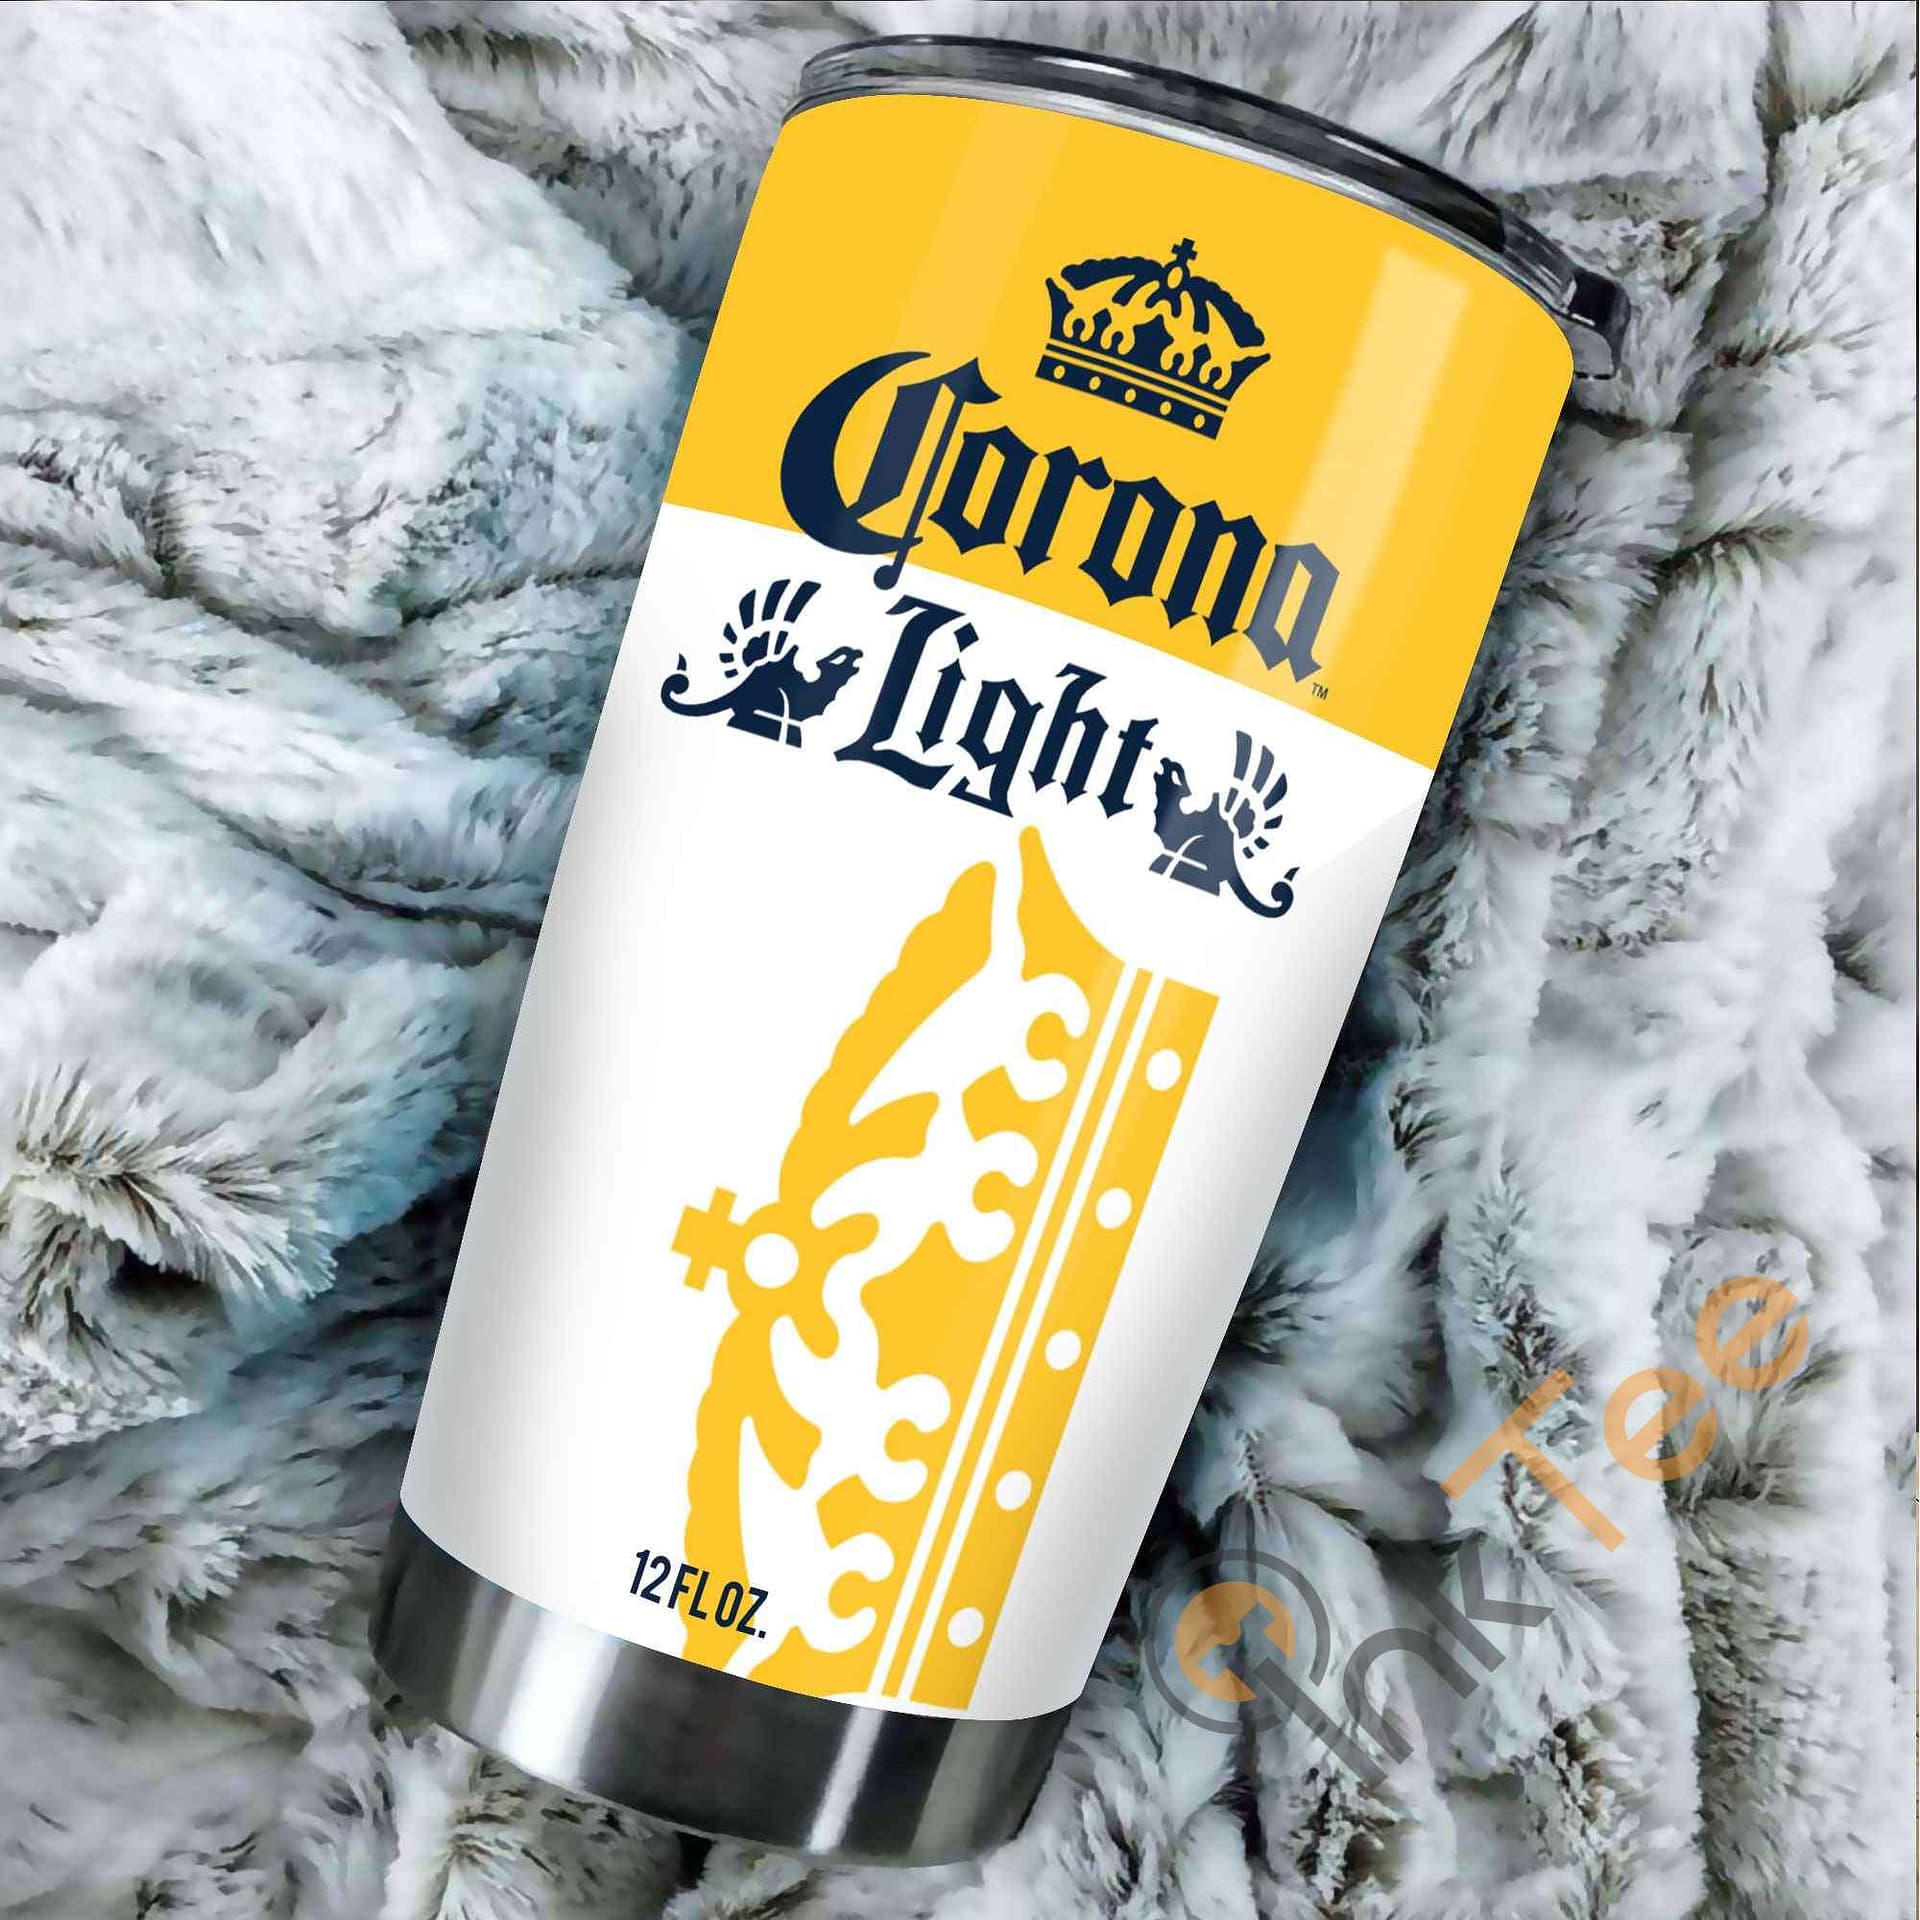 Corona Beer Amazon Best Seller Sku 2807 Stainless Steel Tumbler